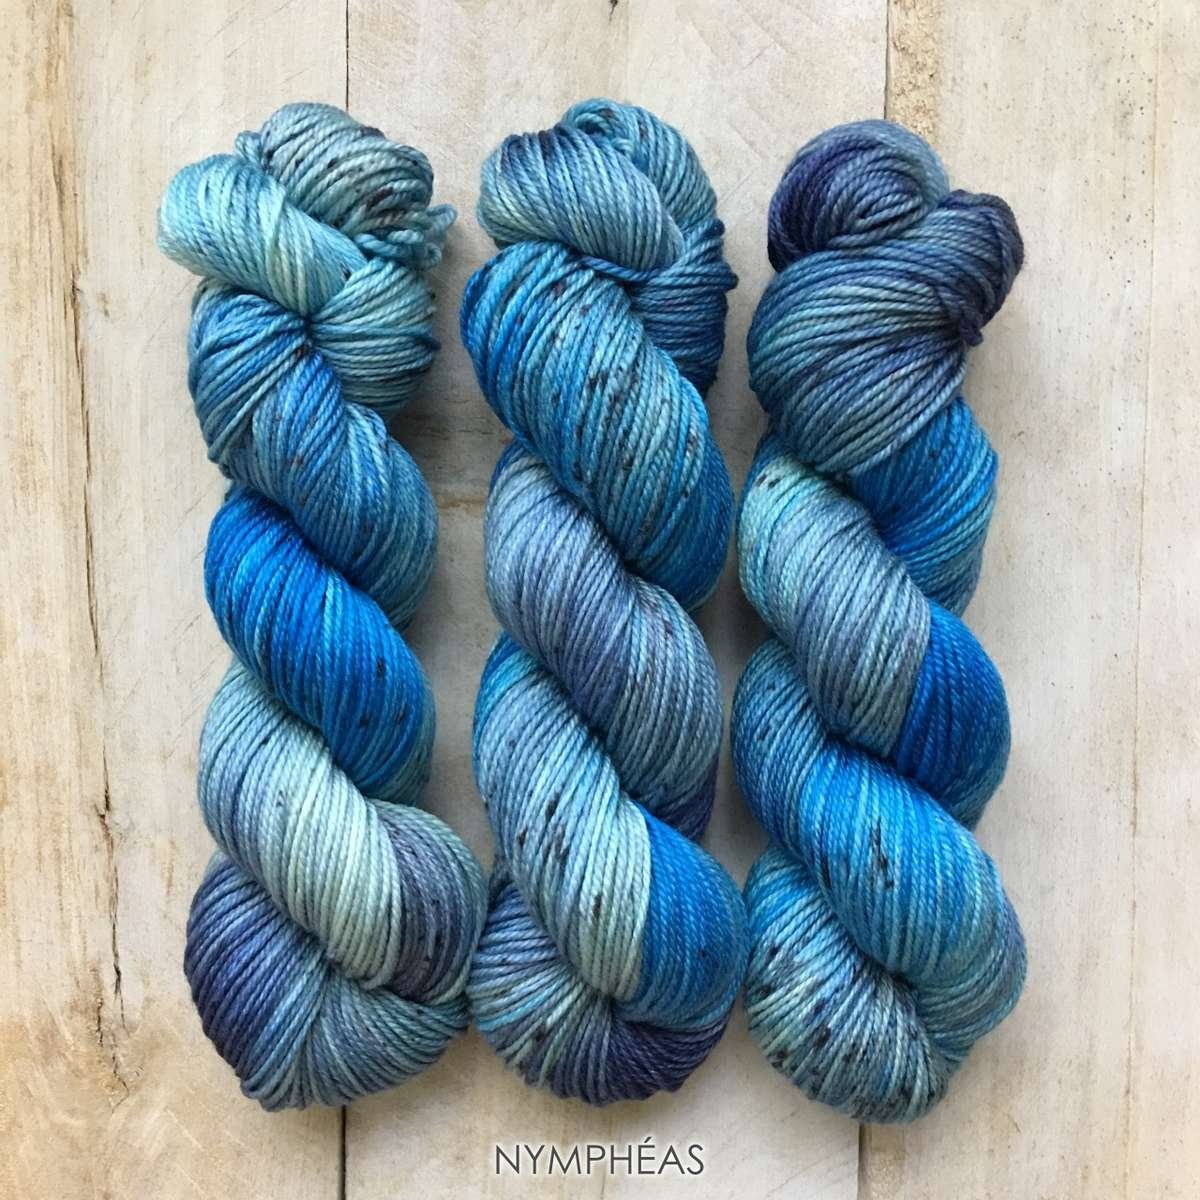 Hand-dyed yarn Louise Robert Nympheas